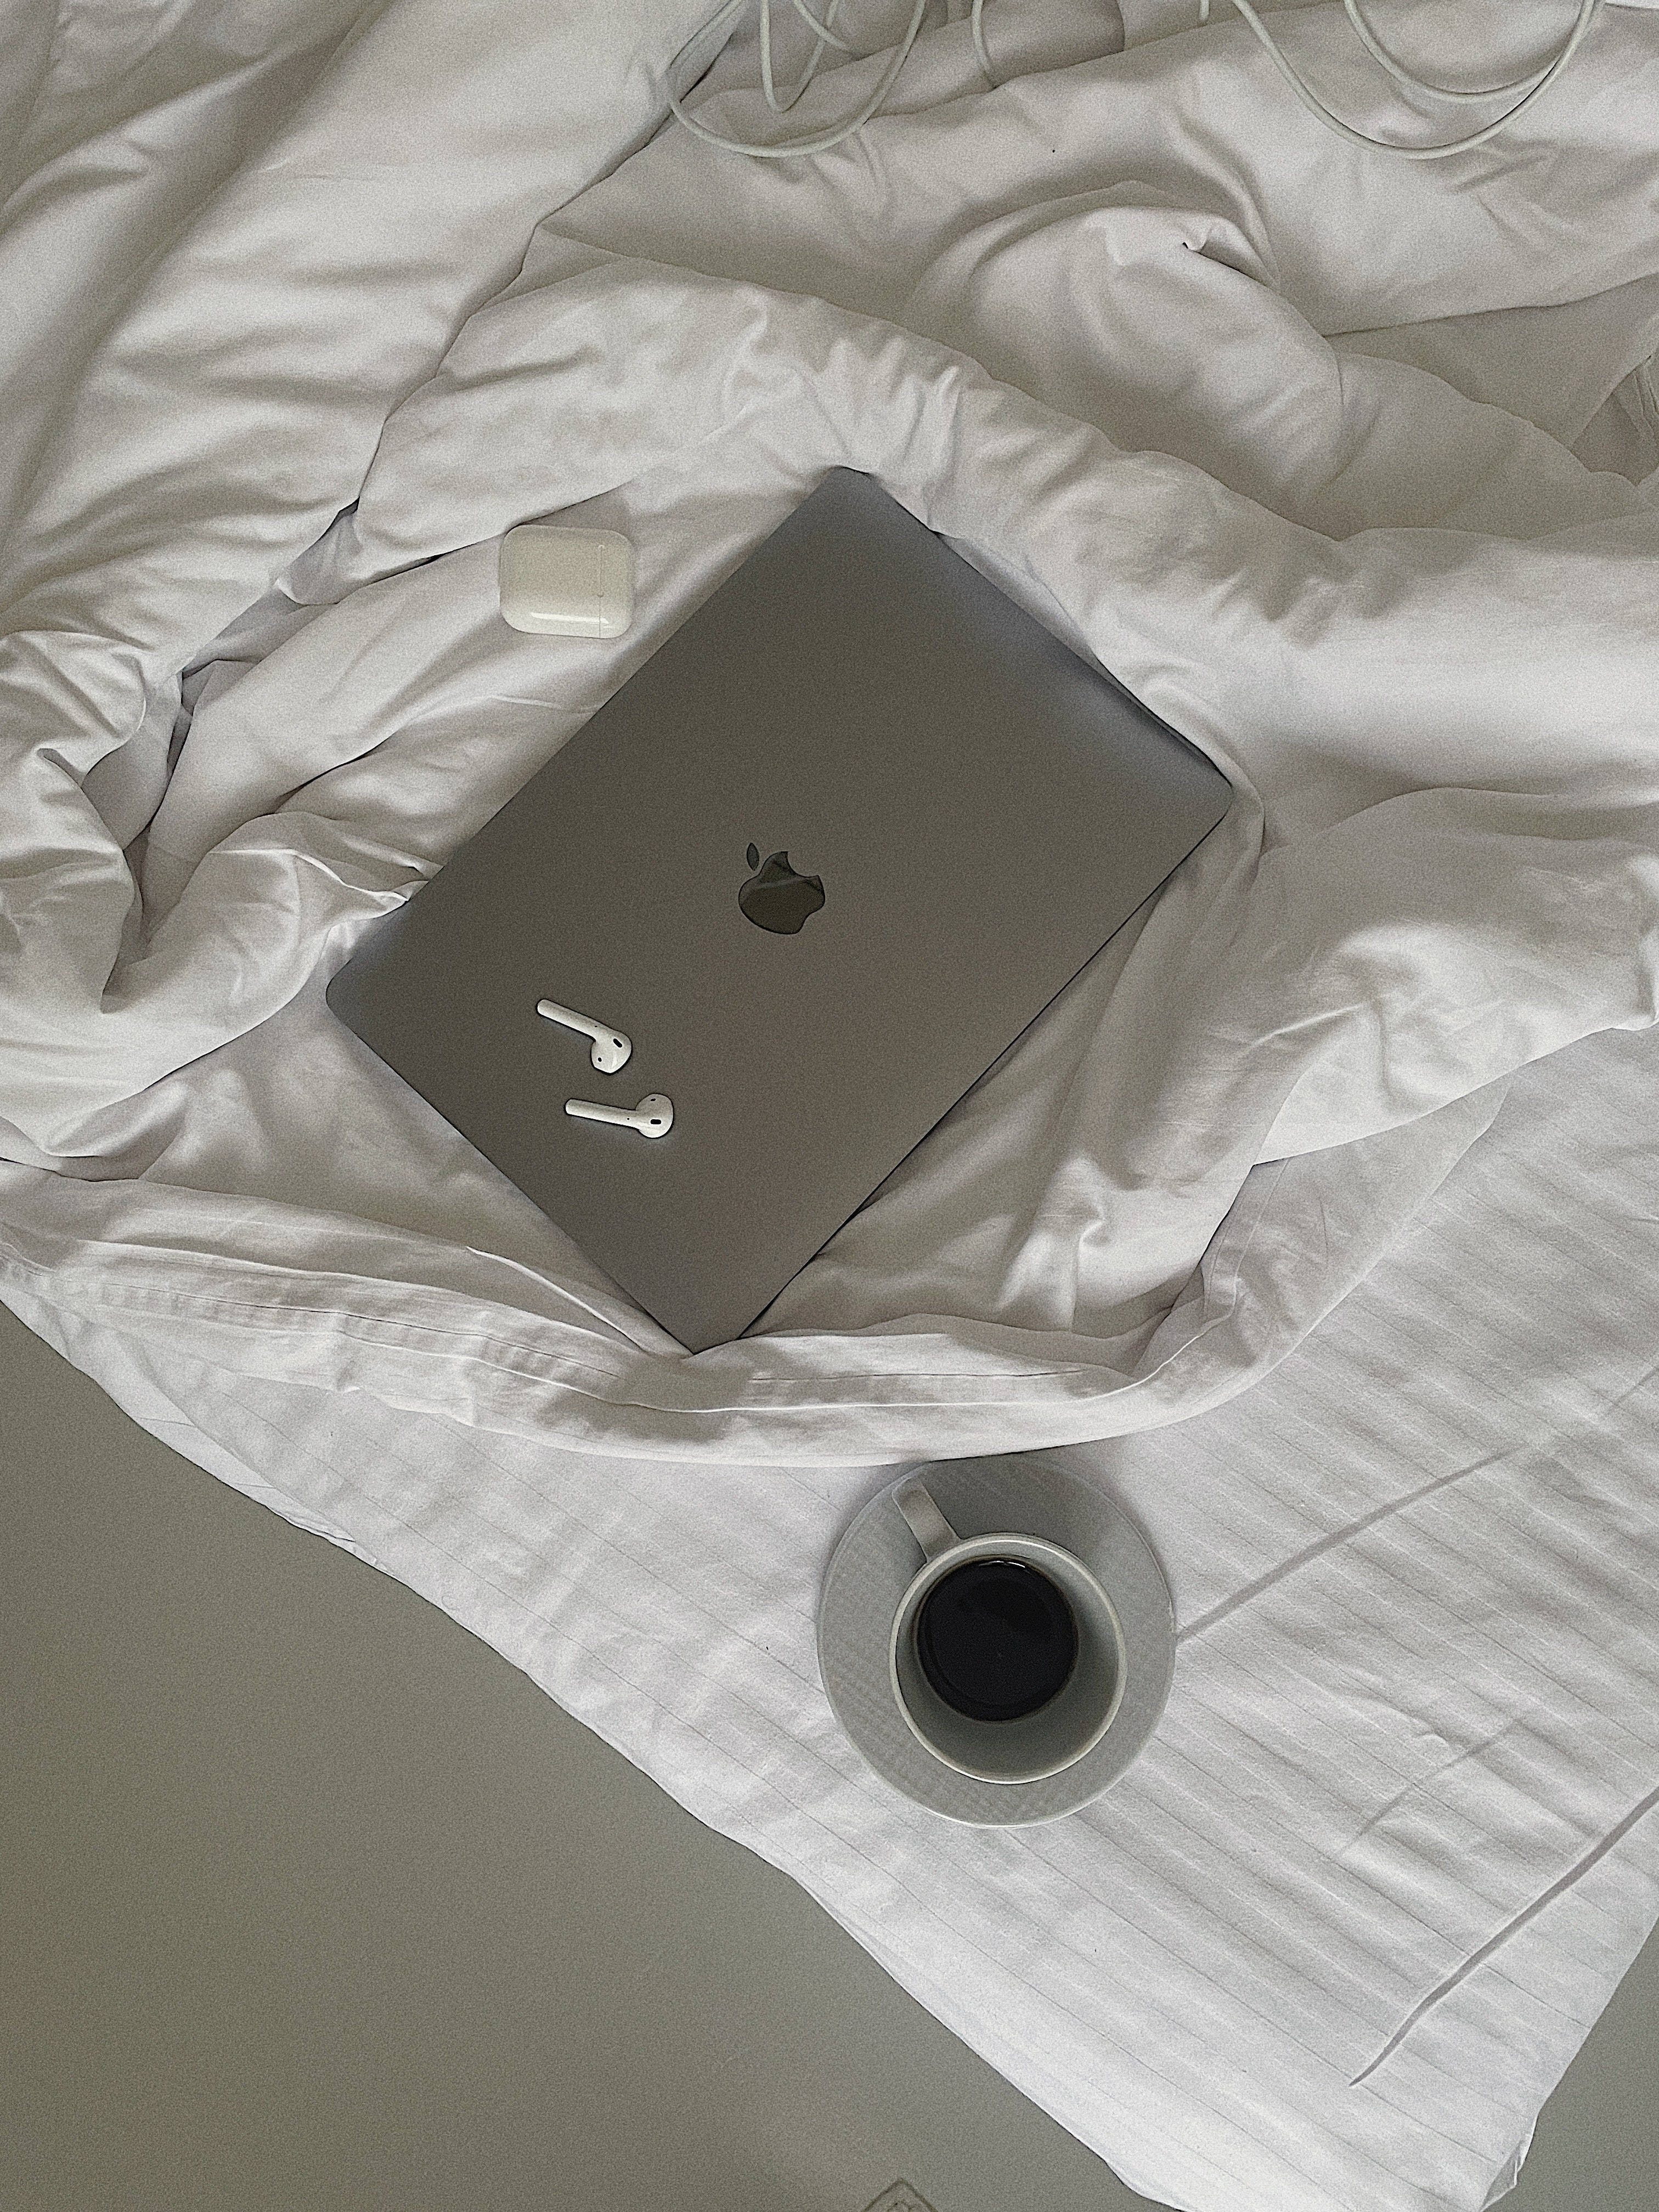 Download Aesthetic Tumblr Laptop Macbook Coffee Wallpaper 